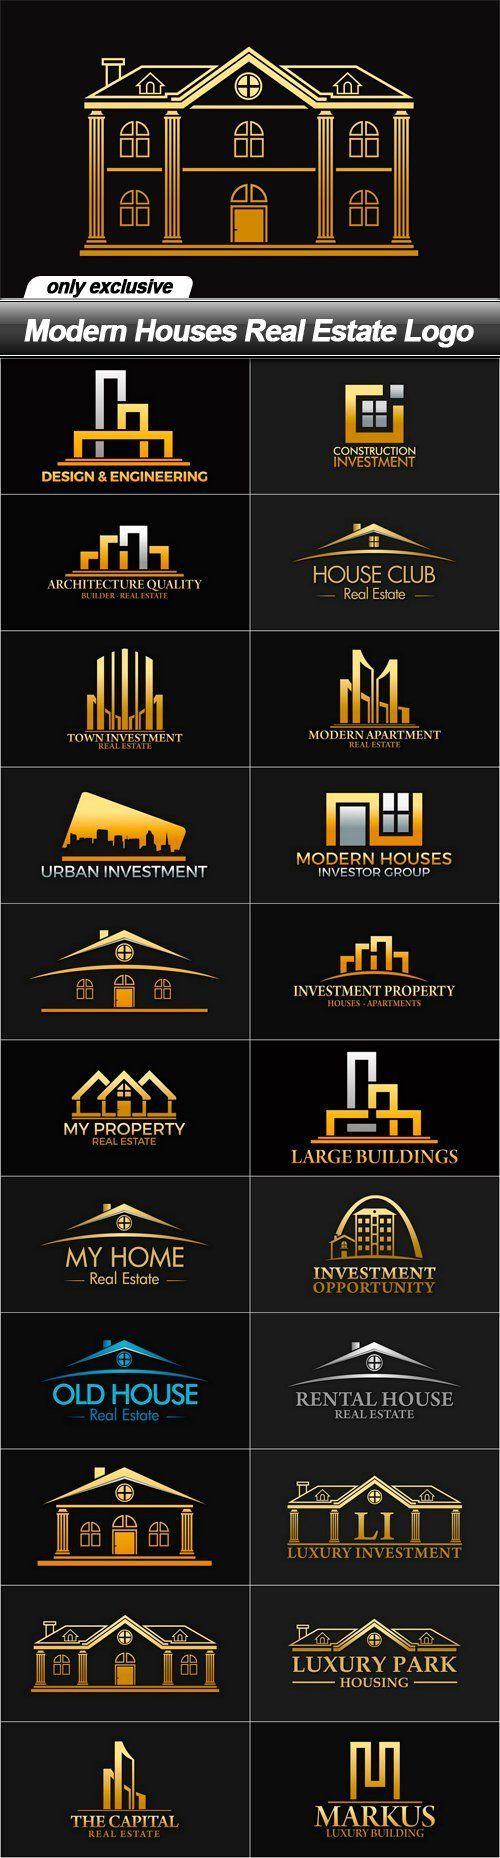 Modern House Logo - Modern Houses Real Estate Logo | Logos | Pinterest | Real estate ...